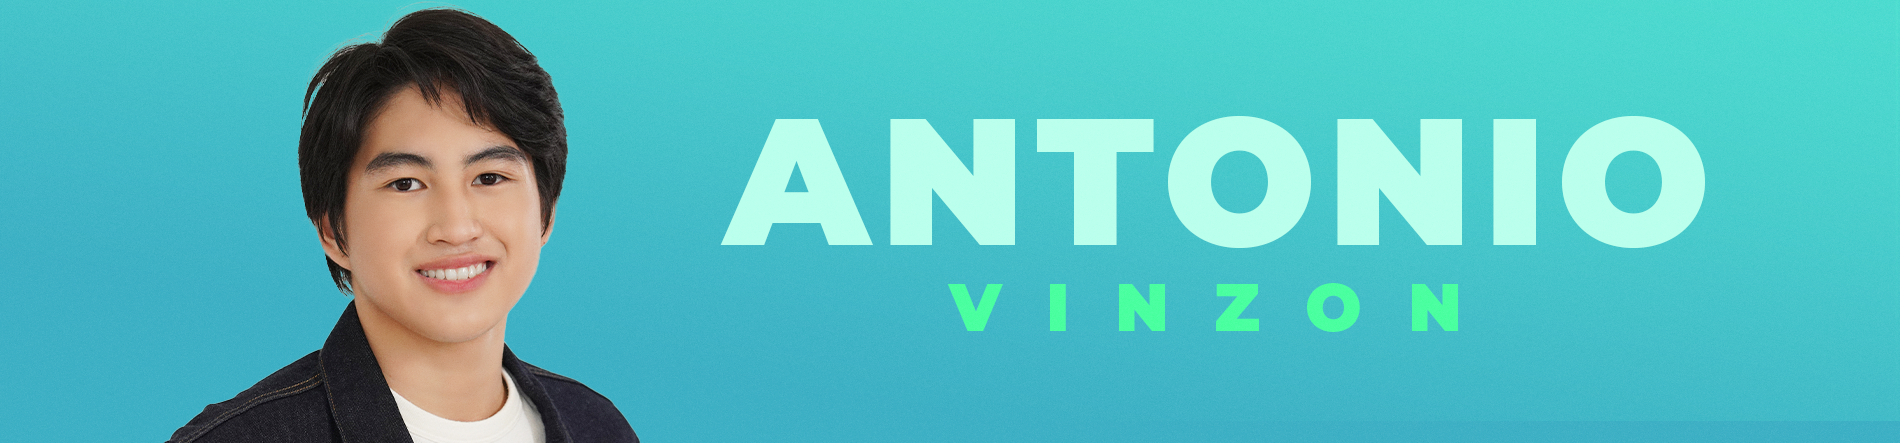 Antonio Desktop Banner